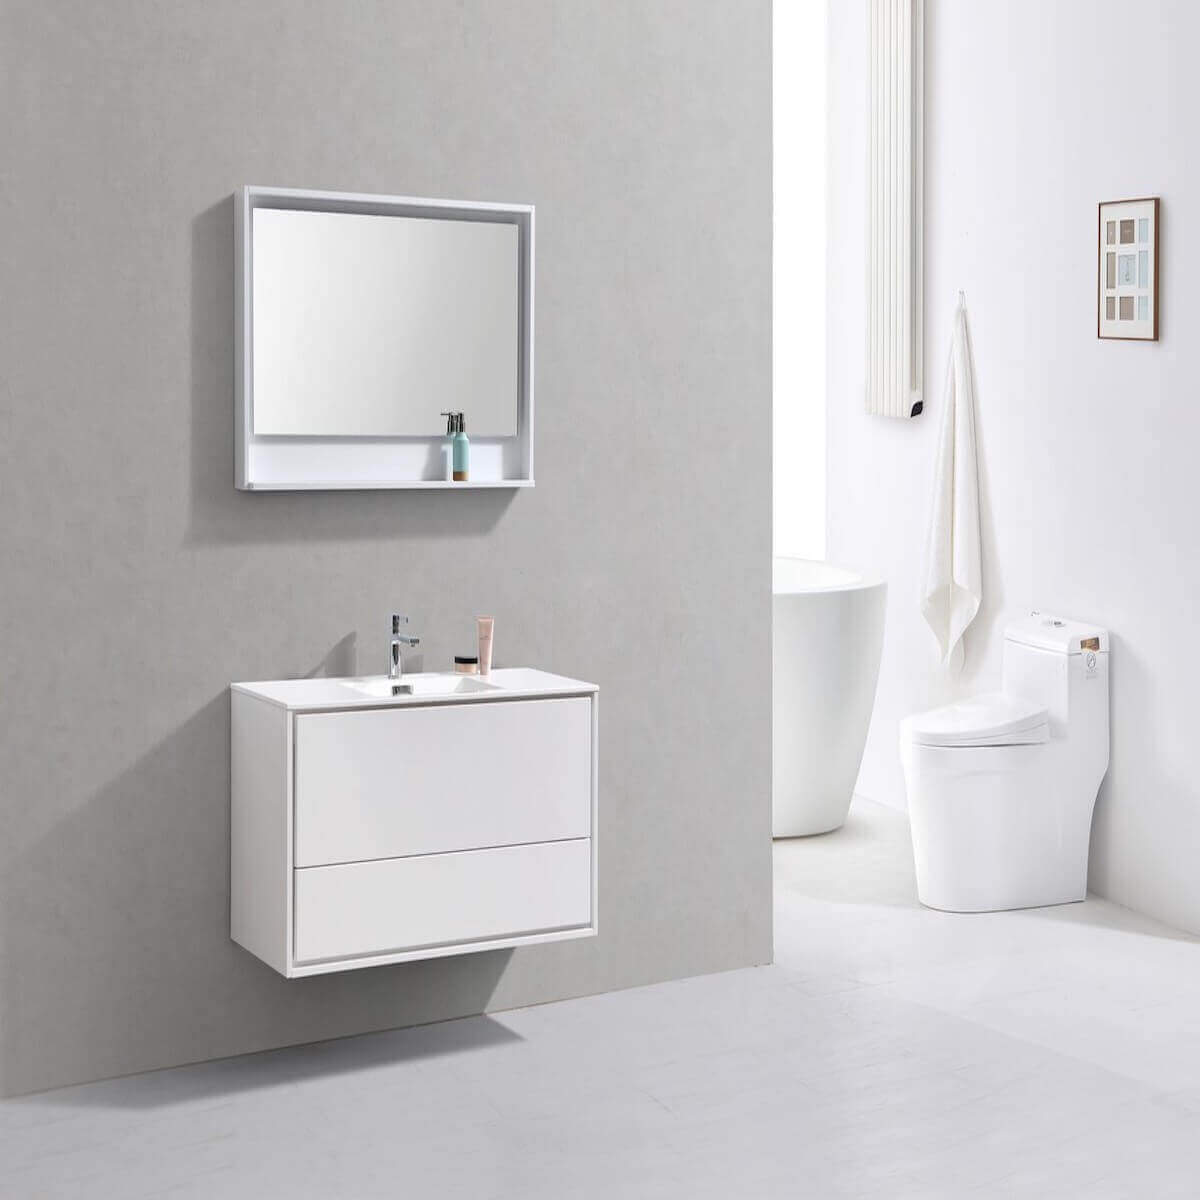 KubeBath DeLusso 48" Gloss White Wall Mount Single Vanity DL48S-GW in Bathroom #finish_high gloss white